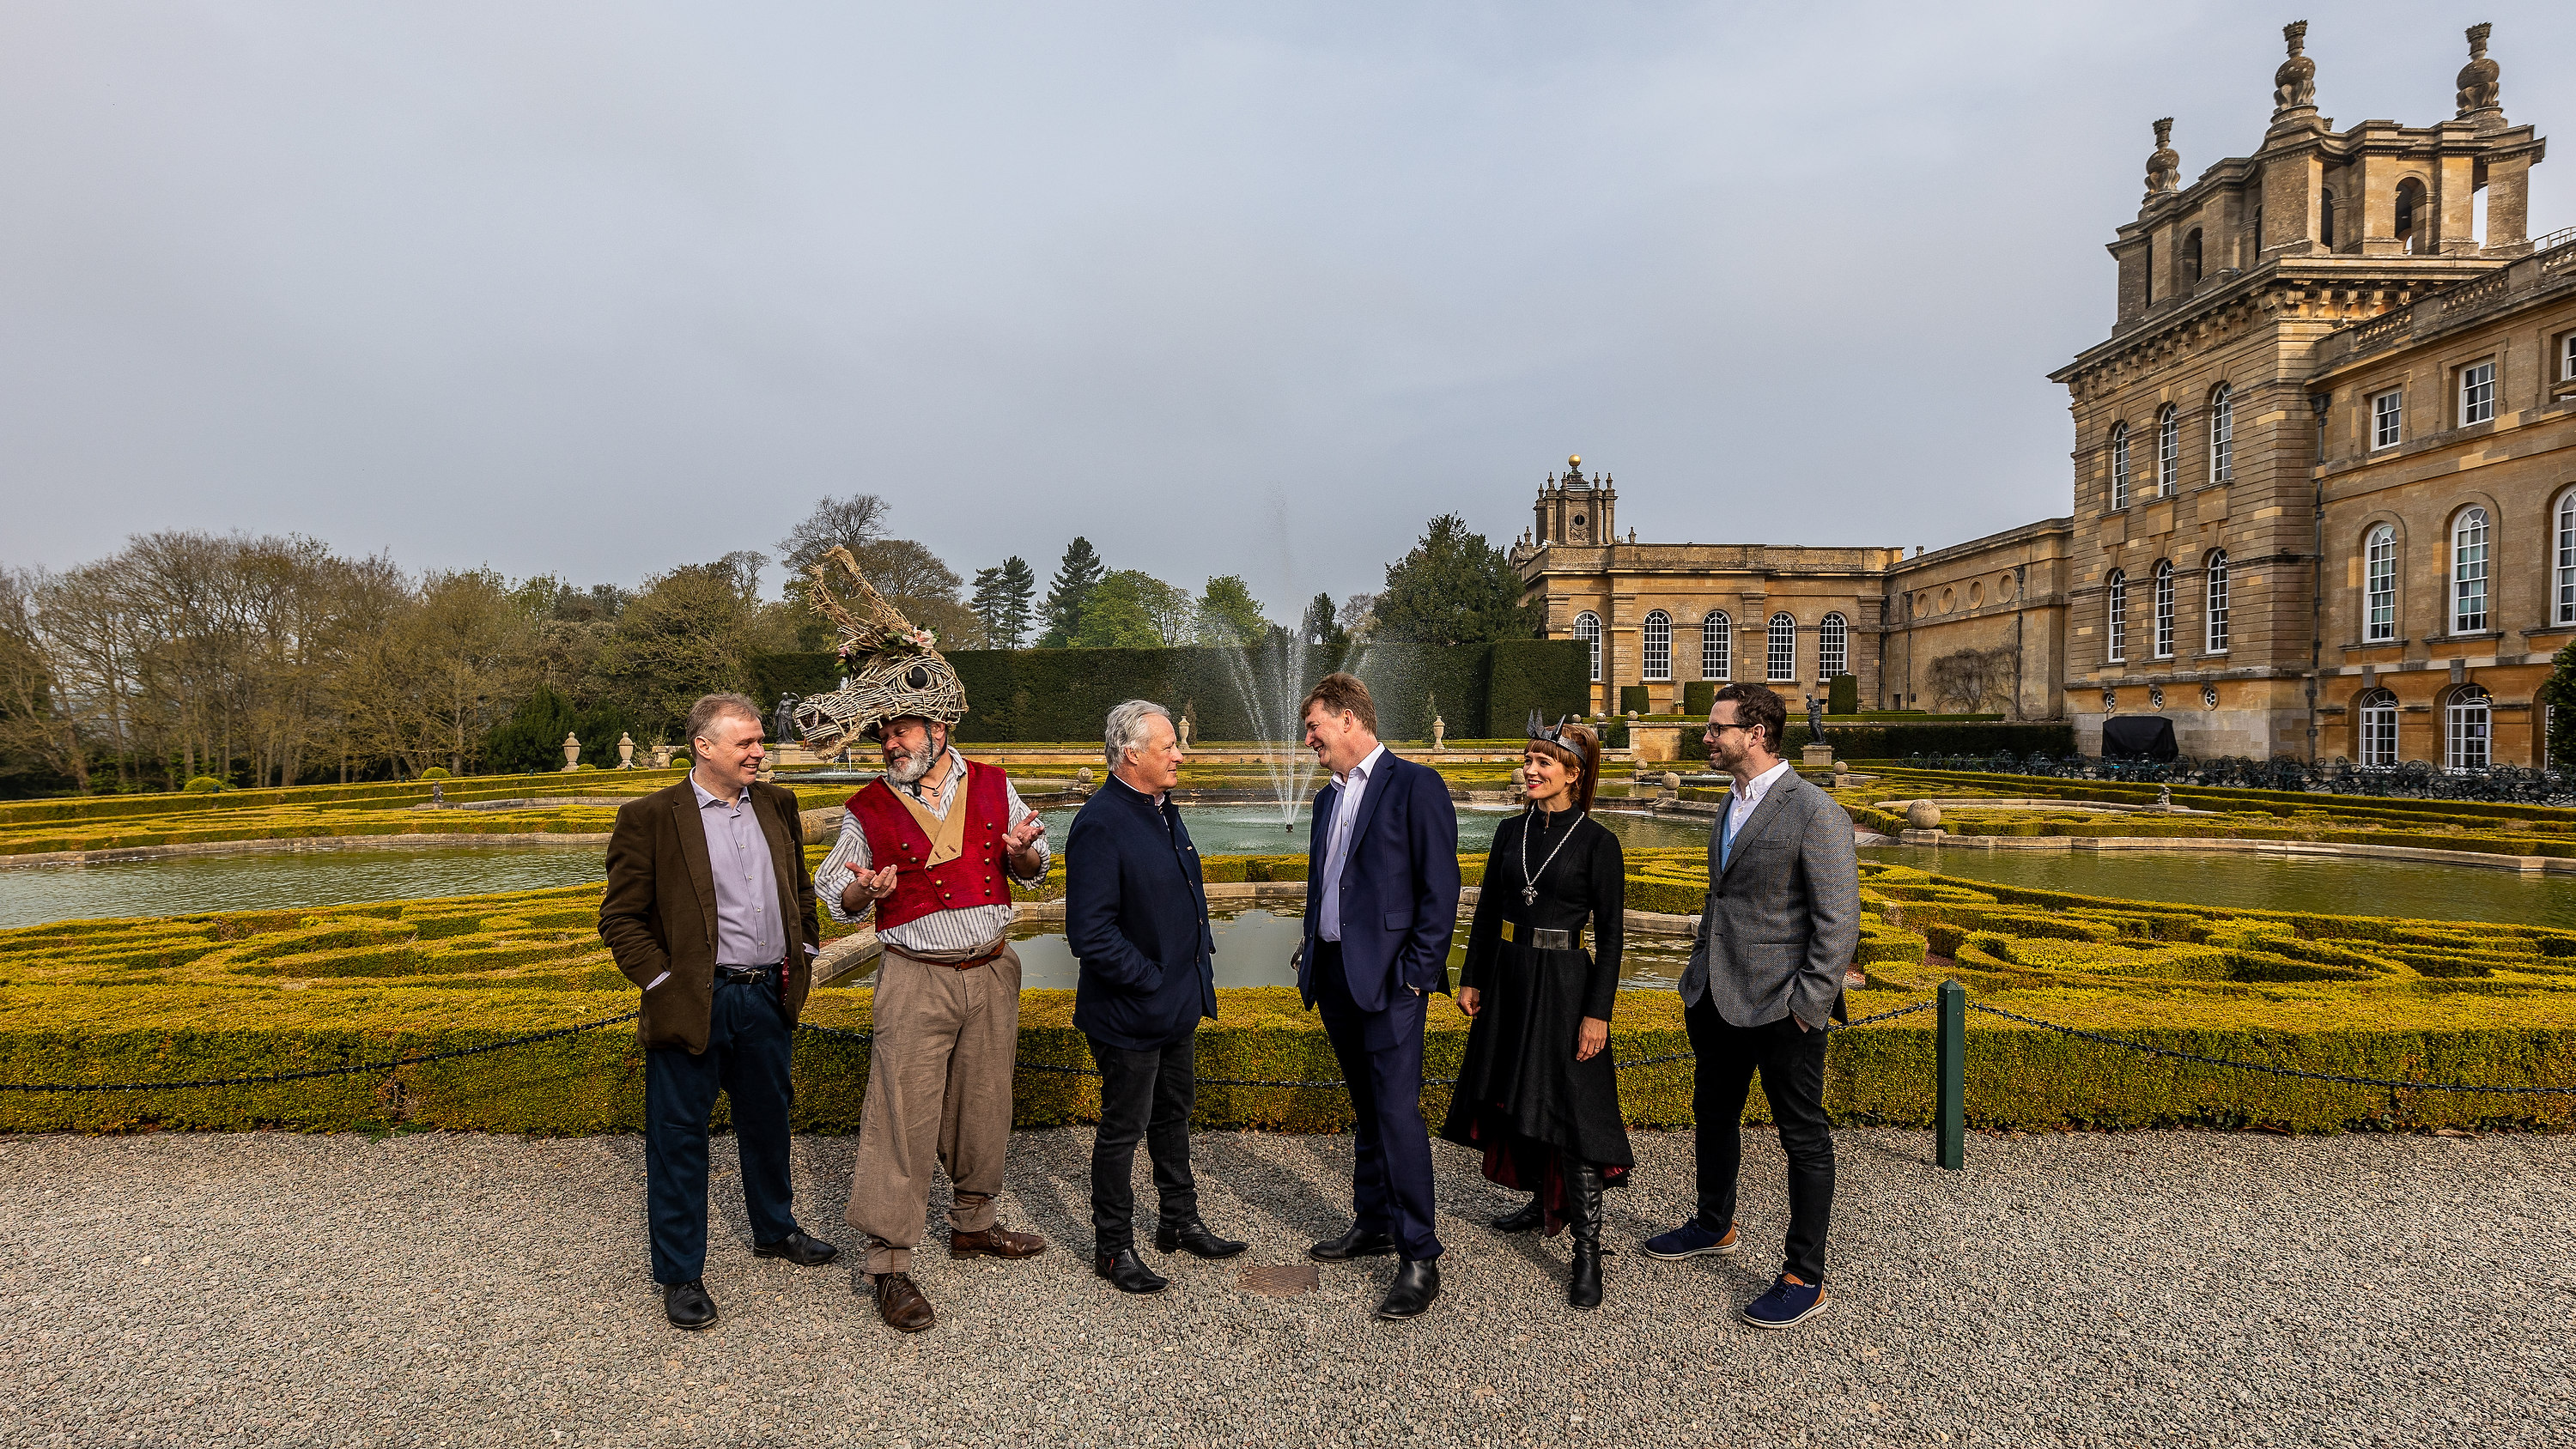 – Dominic Hare, Paul Hawkyard, James Cundall, Anthony Findlay, Leandra Ashton and Joni Marks at Blenheim Palace 